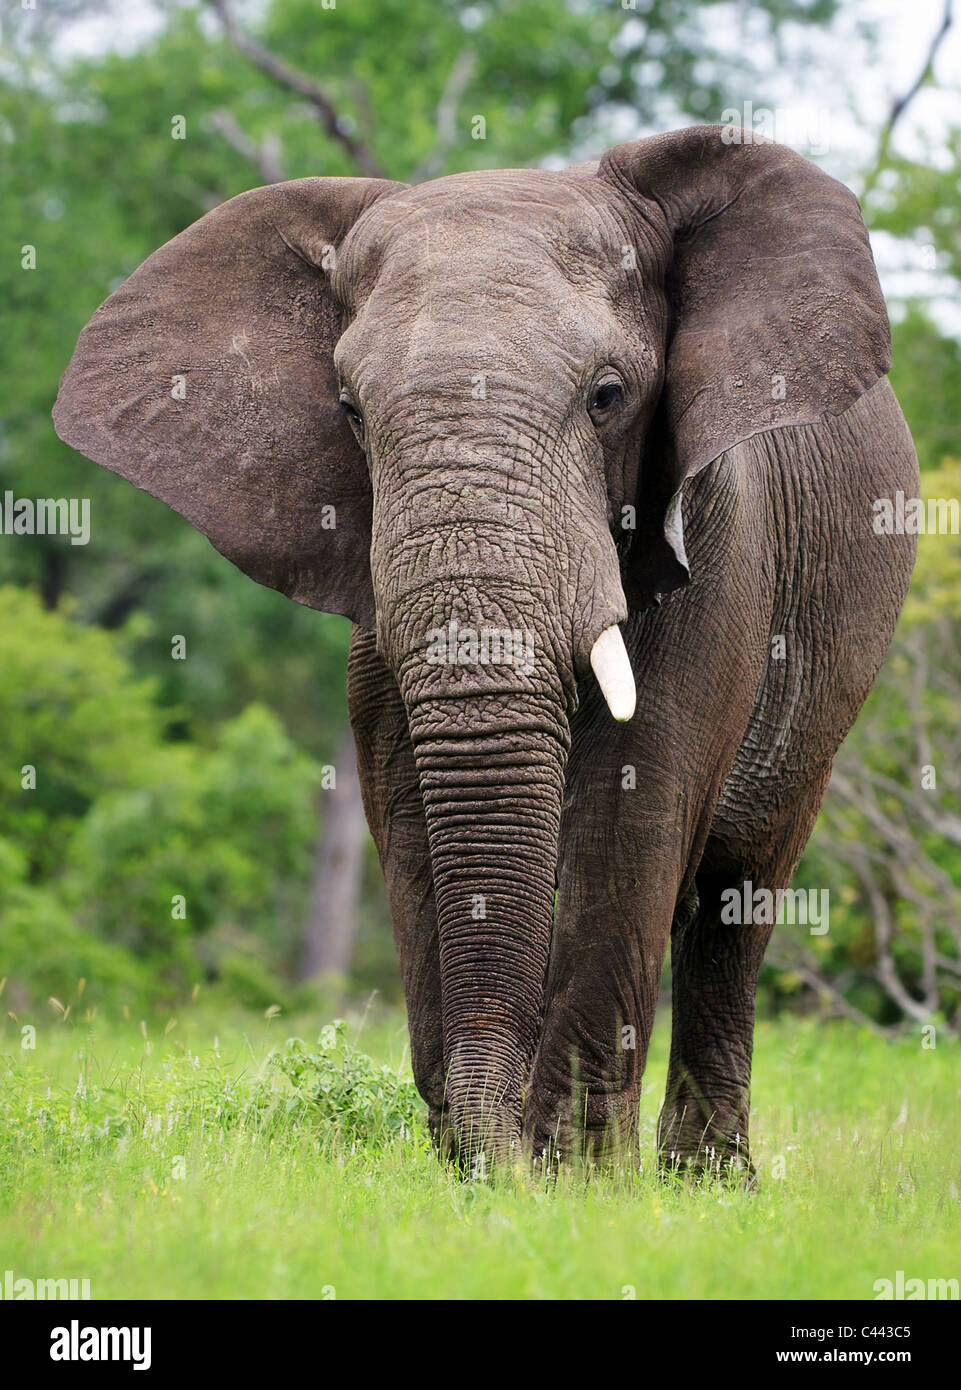 Afrikanische Elefanten Wandern auf grünen Rasen - Kruger National Park - Südafrika Stockfoto